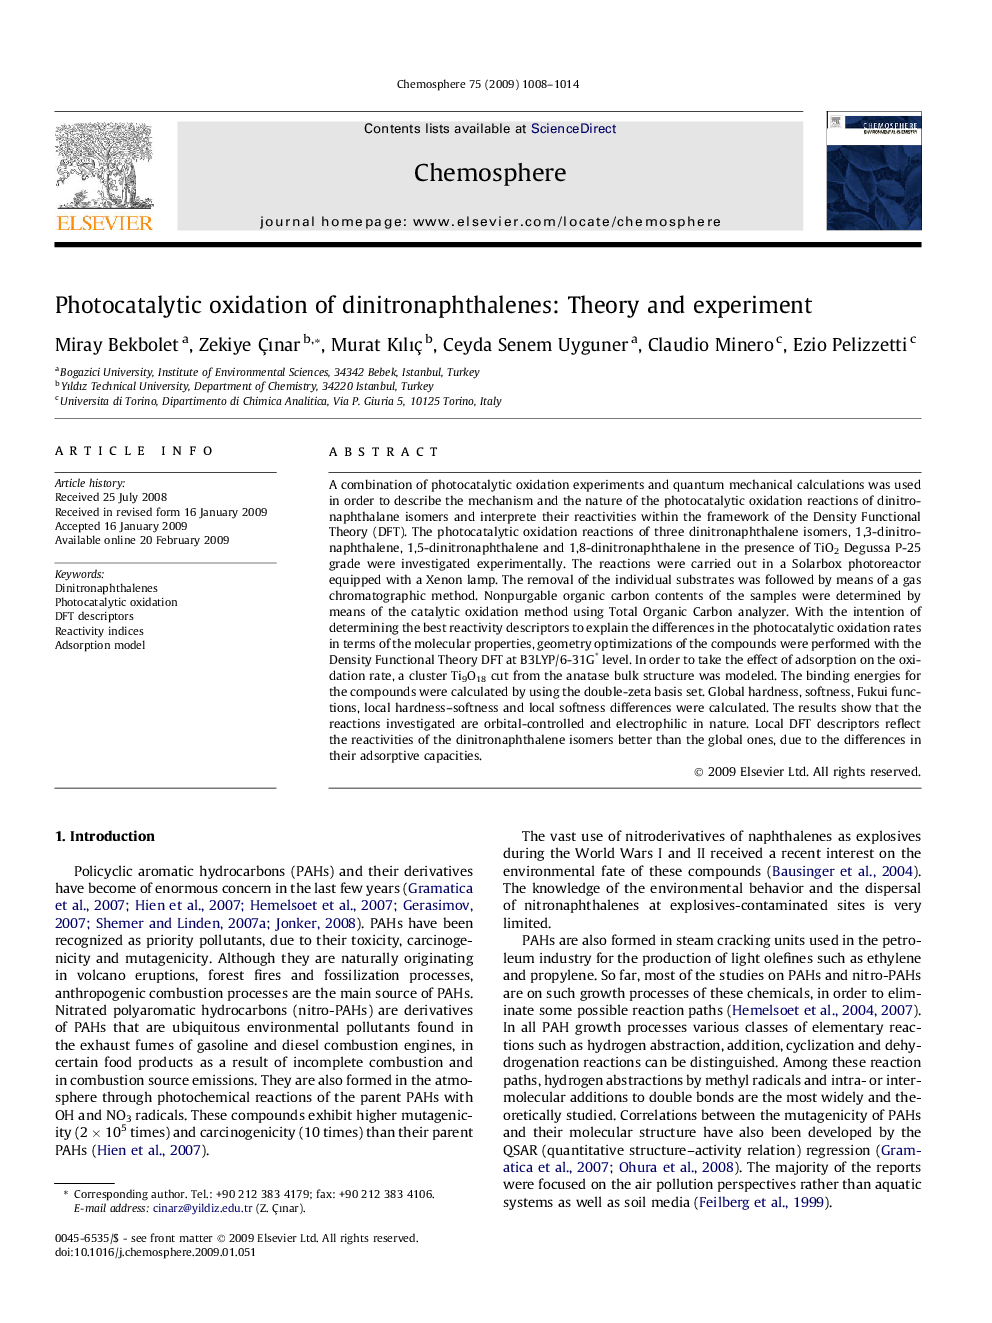 Photocatalytic oxidation of dinitronaphthalenes: Theory and experiment